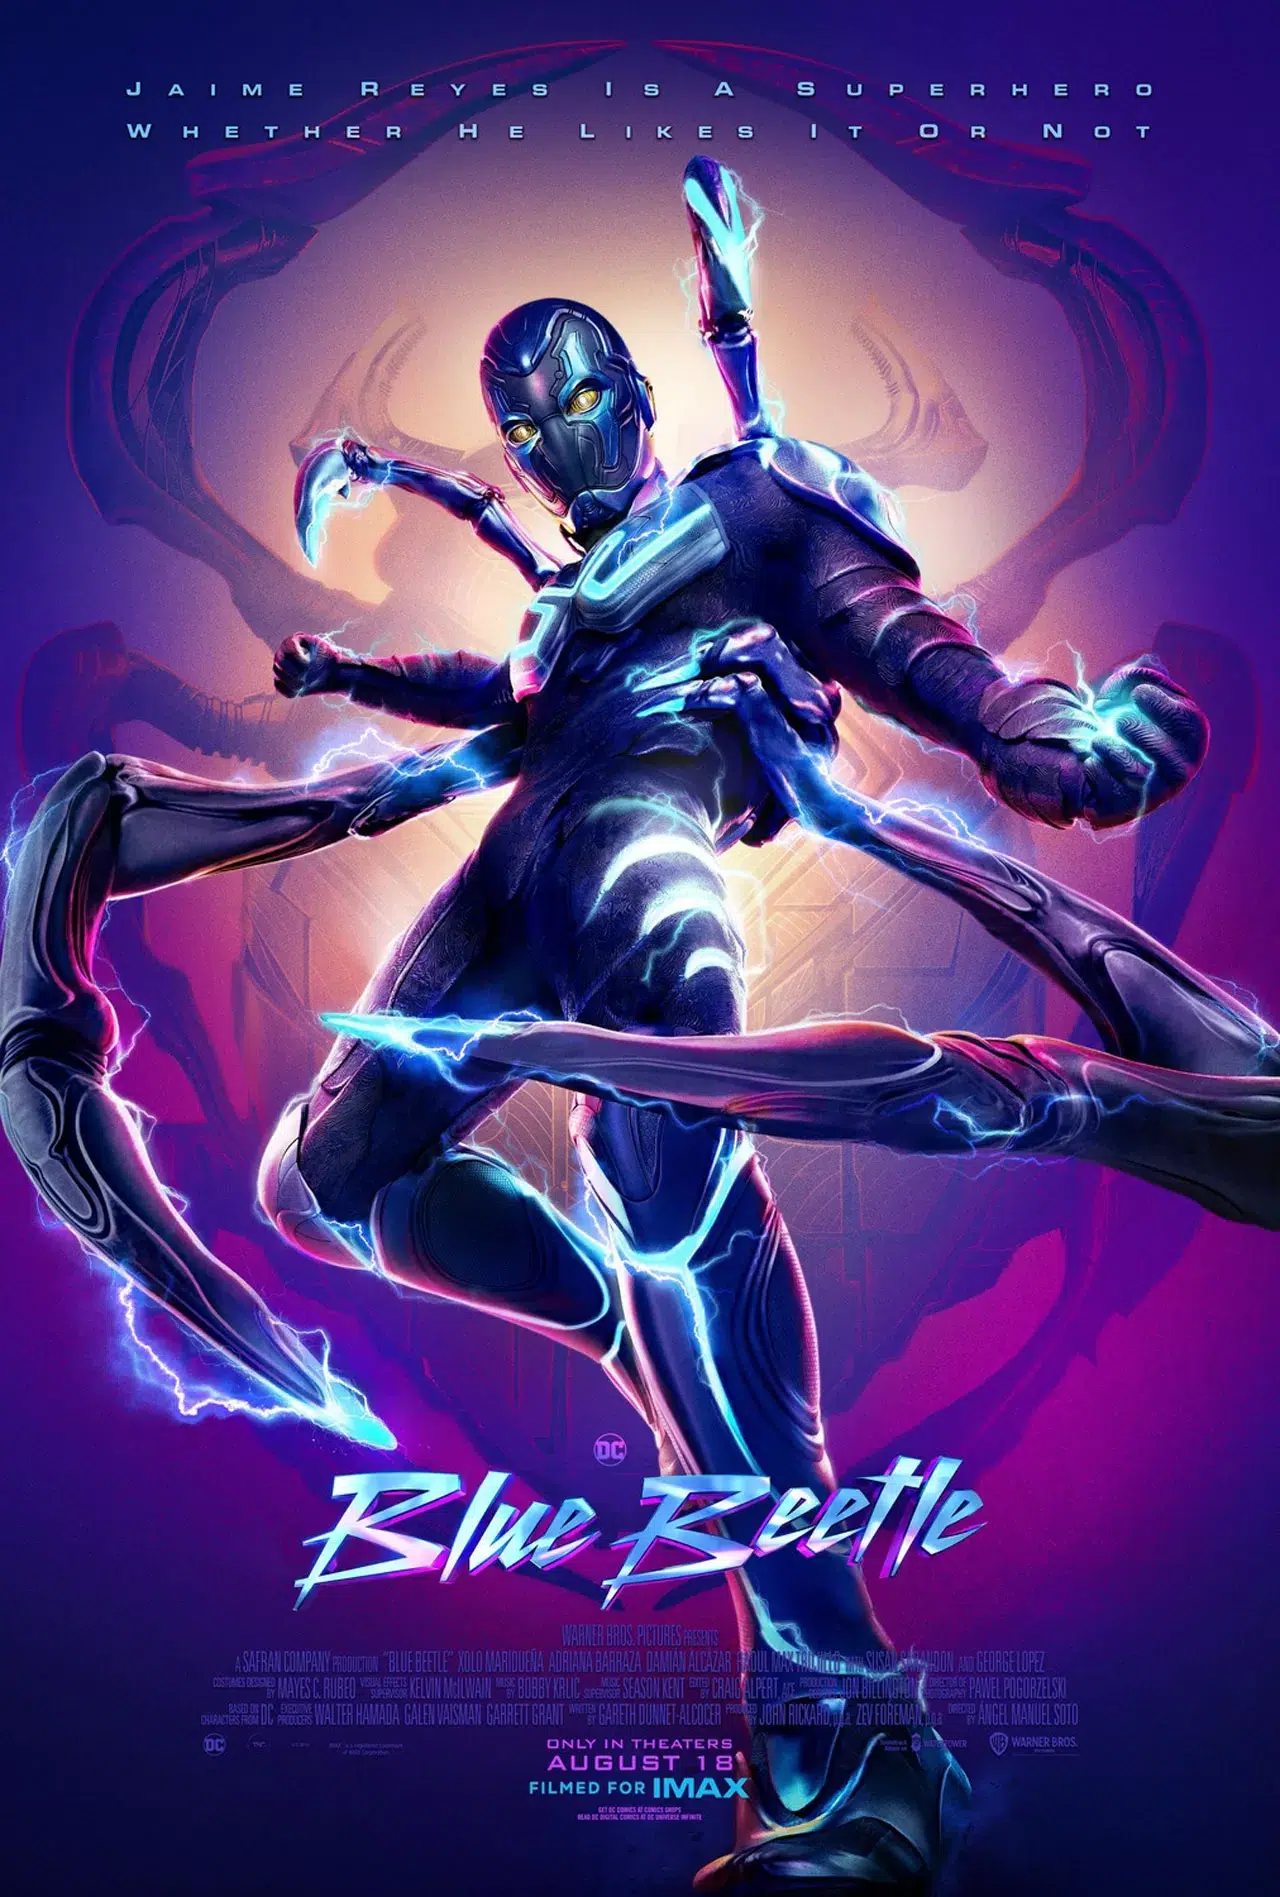 Blue Beetle - The Art of VFX